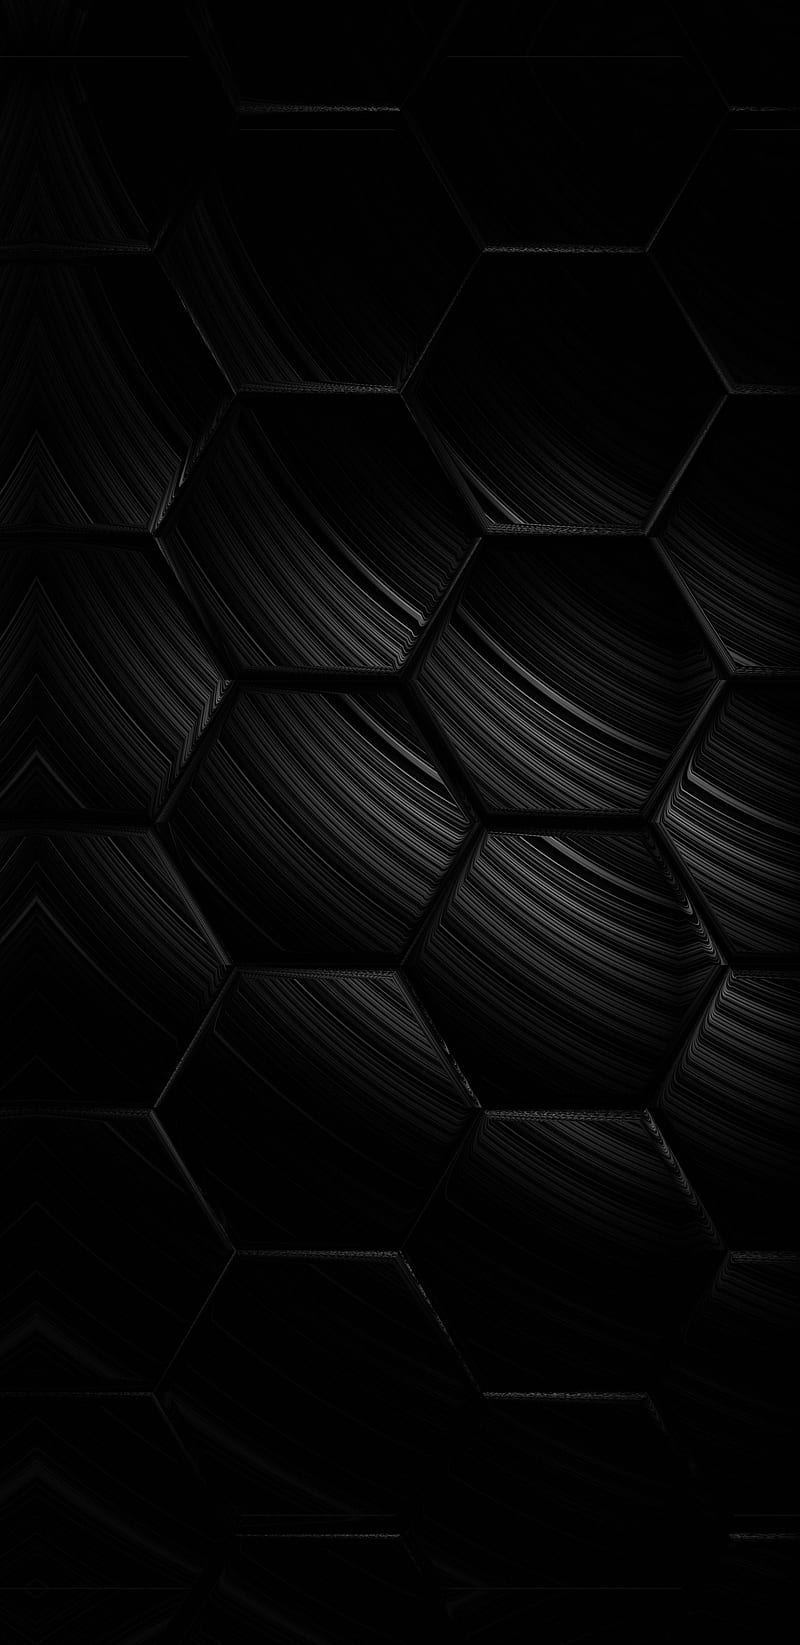 Solid Black Wallpapers - Top 30 Best Solid Black Wallpapers Download